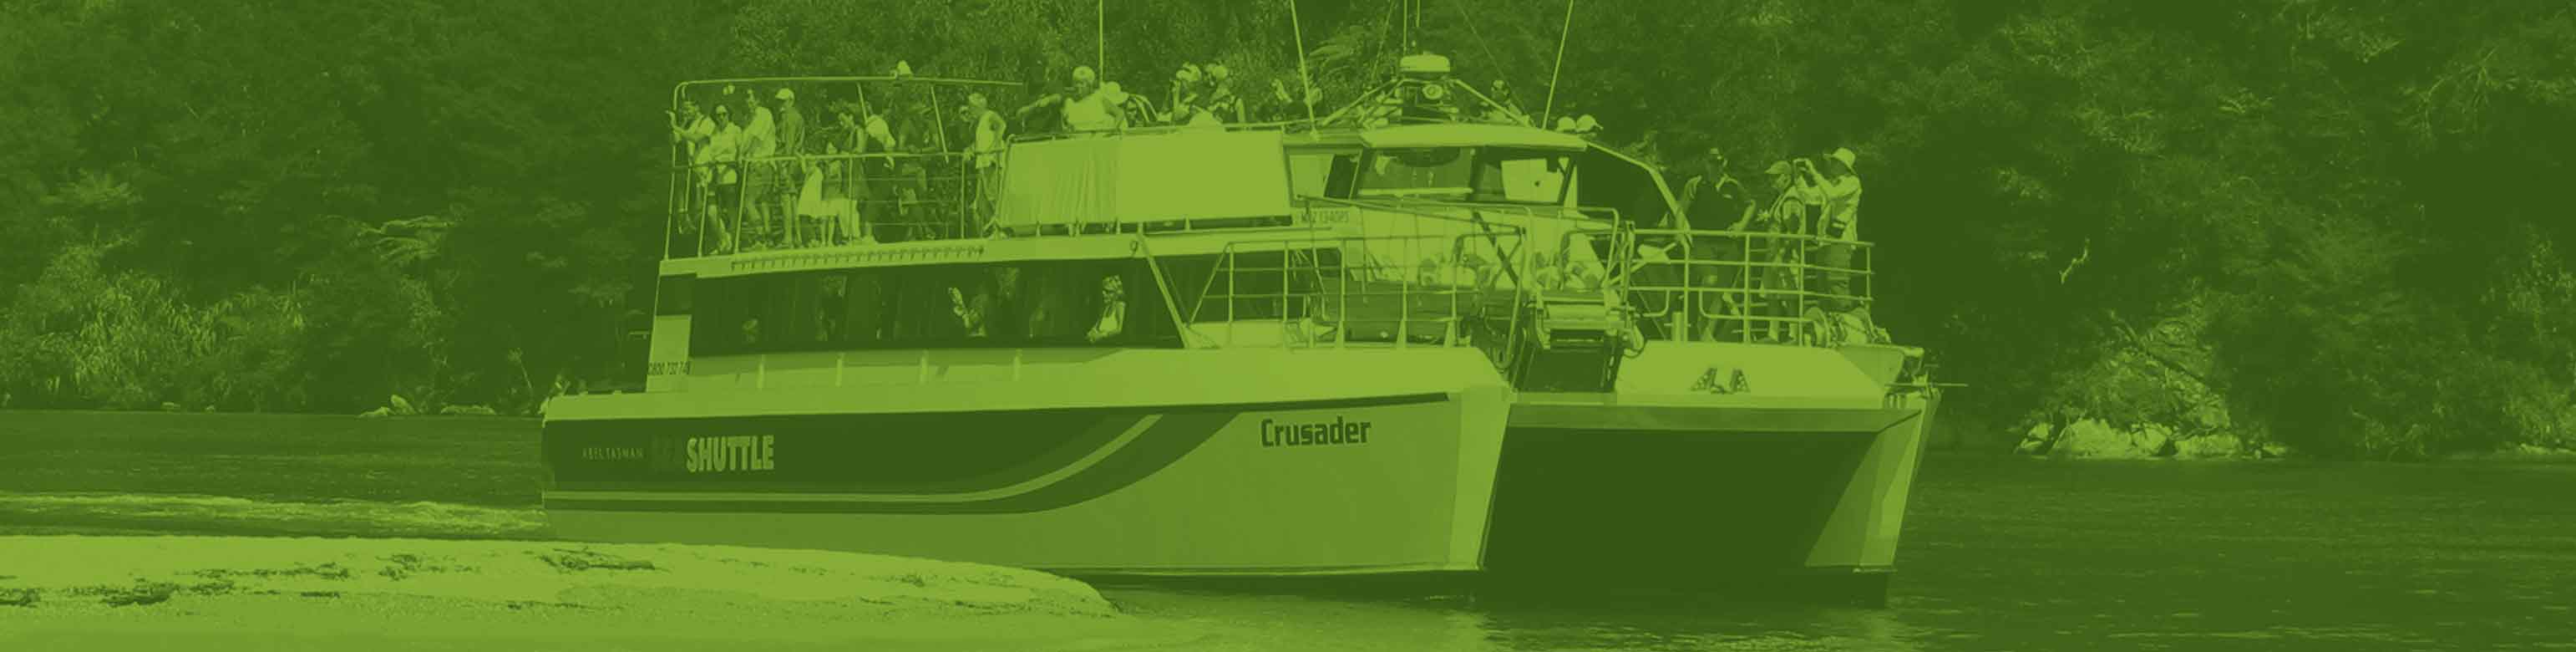 Crusader sea shuttle maritime crewing blogH